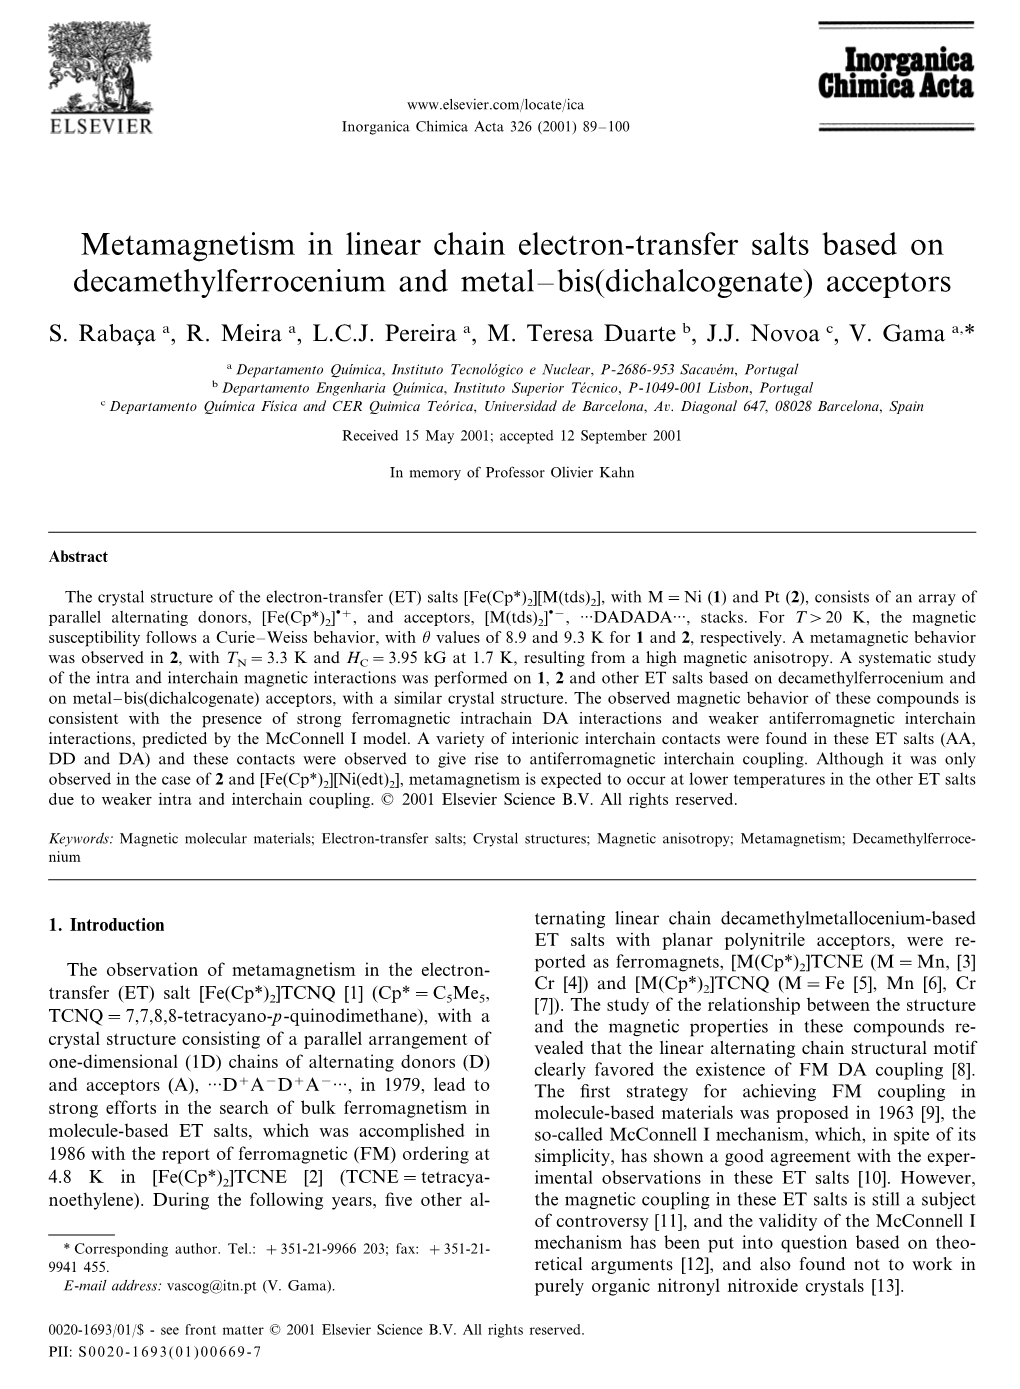 Metamagnetism in Linear Chain Electron-Transfer Salts Based on Decamethylferrocenium and Metal–Bis(Dichalcogenate) Acceptors